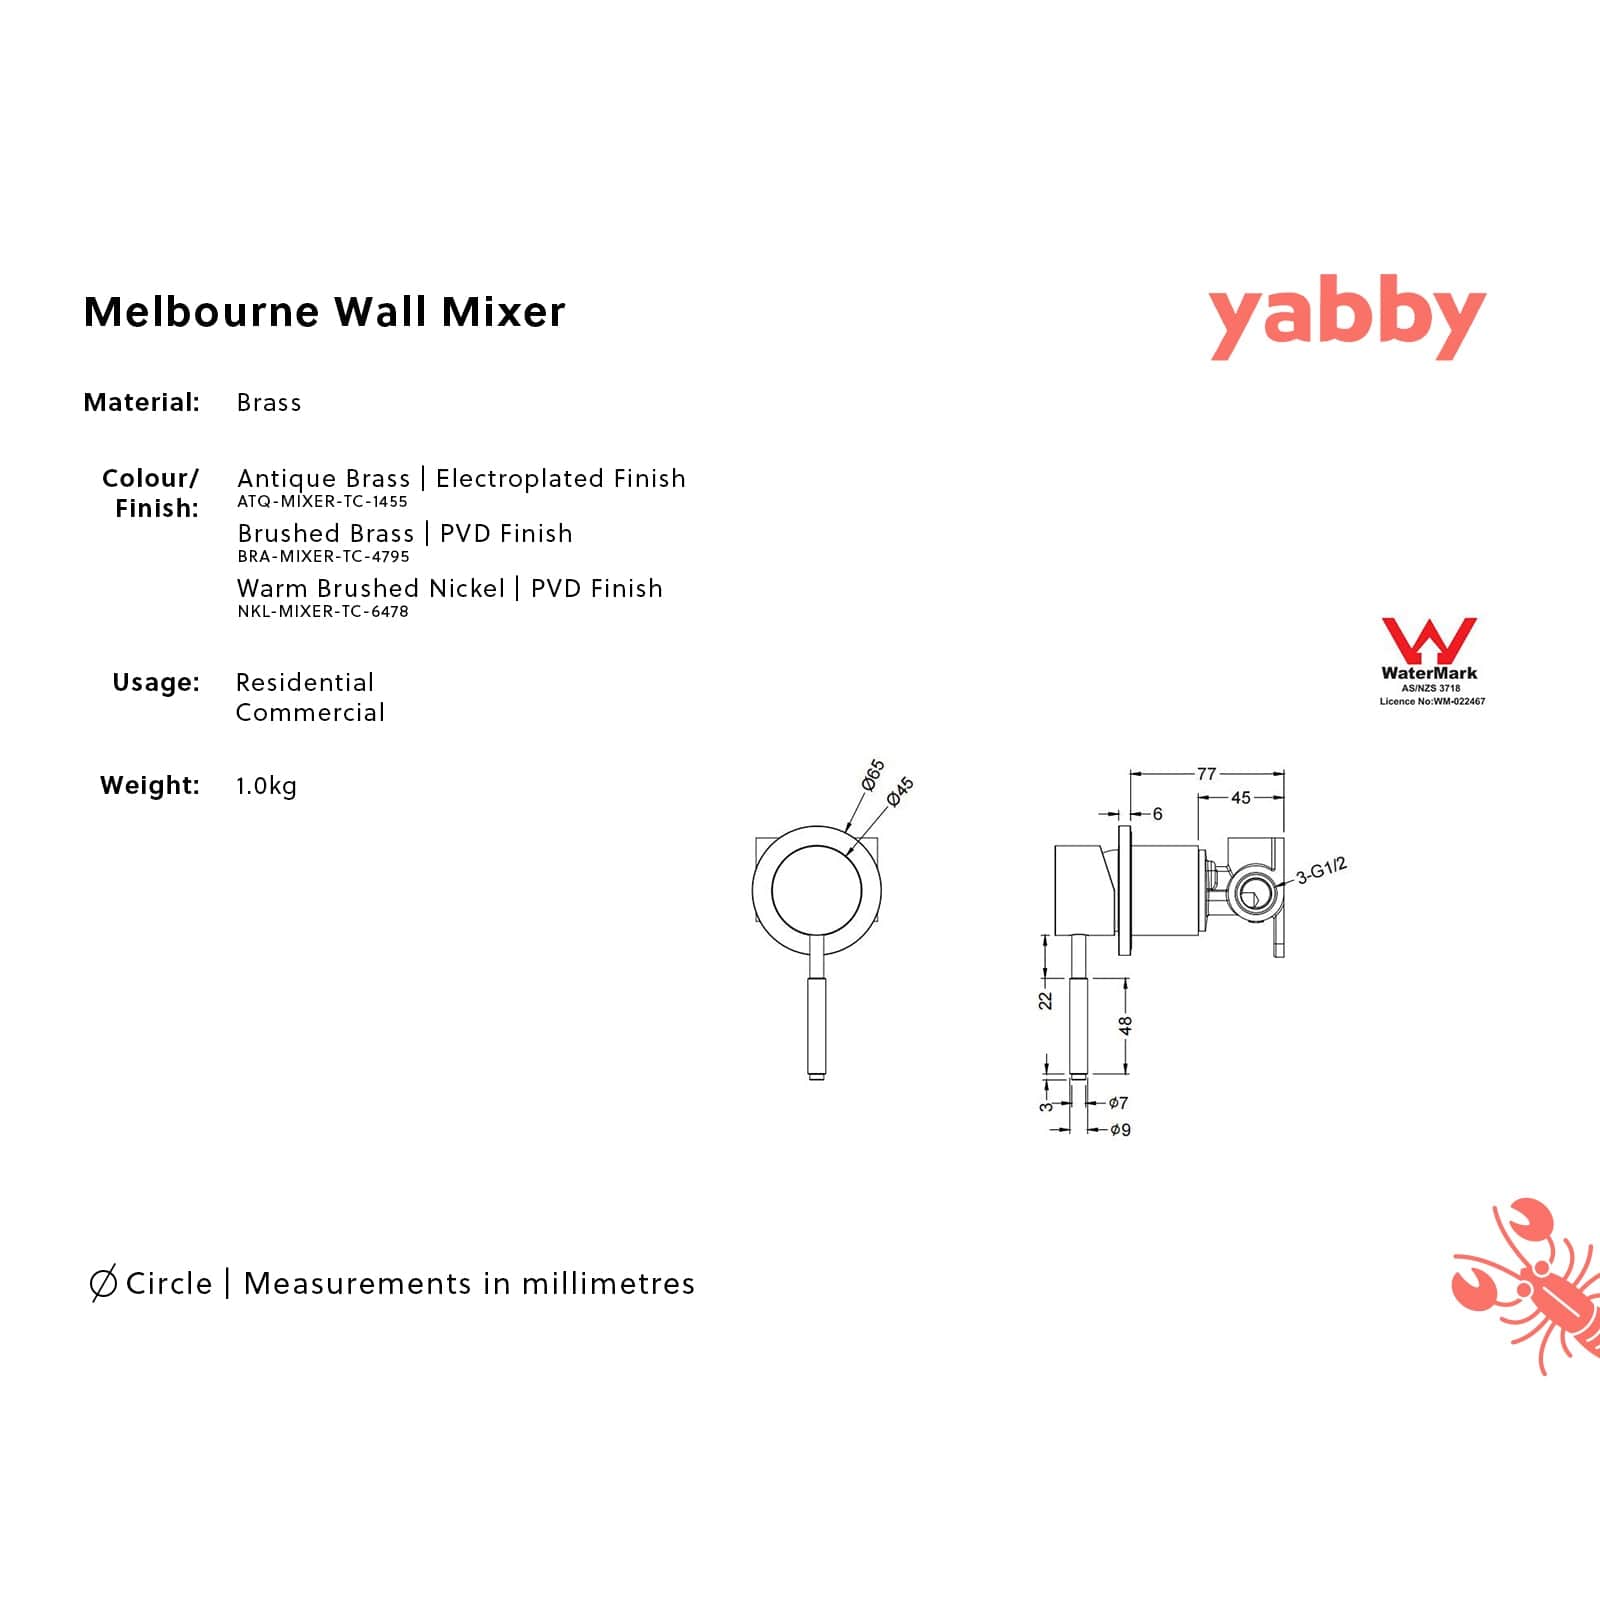 TileCloud TAPWARE Melbourne Wall Mixer Warm Brushed Nickel